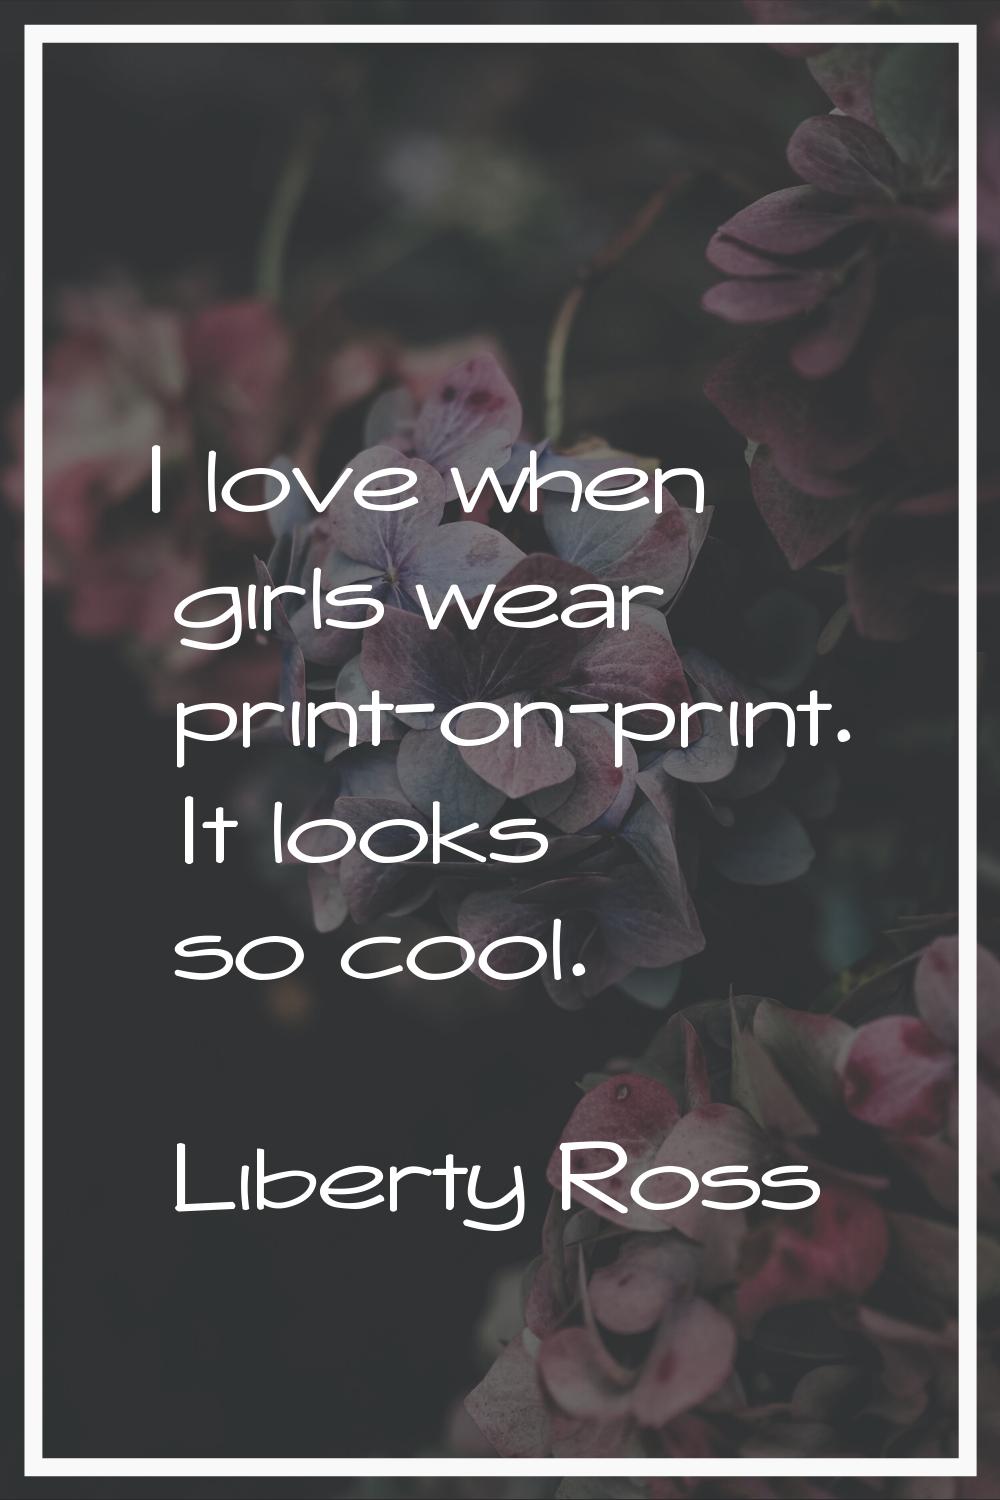 I love when girls wear print-on-print. It looks so cool.